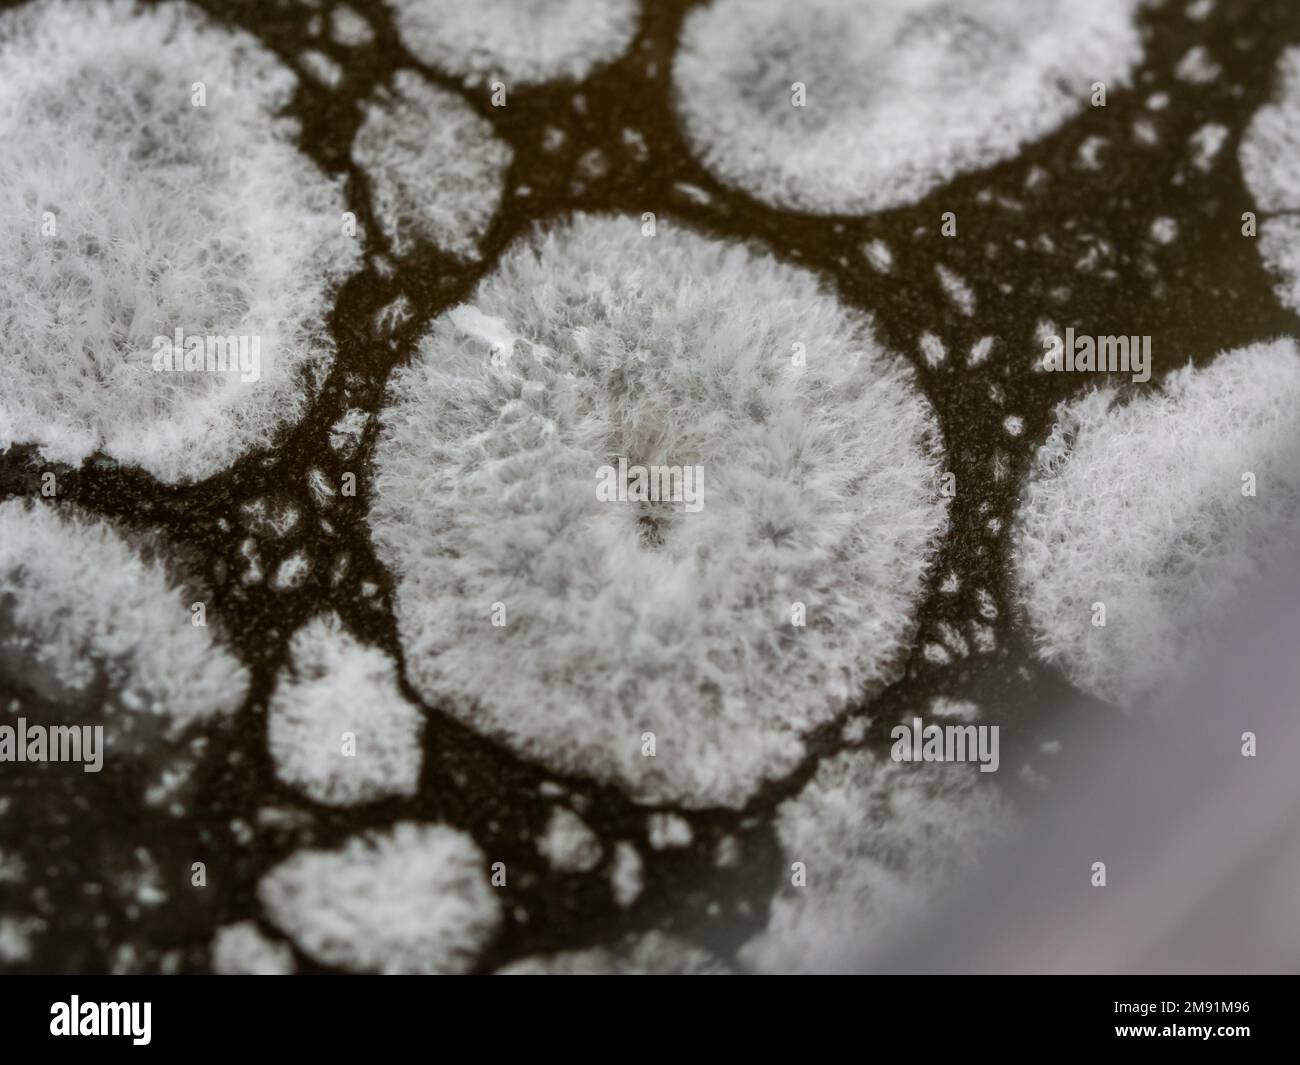 Pilz sporen mikroskop -Fotos und -Bildmaterial in hoher Auflösung – Alamy